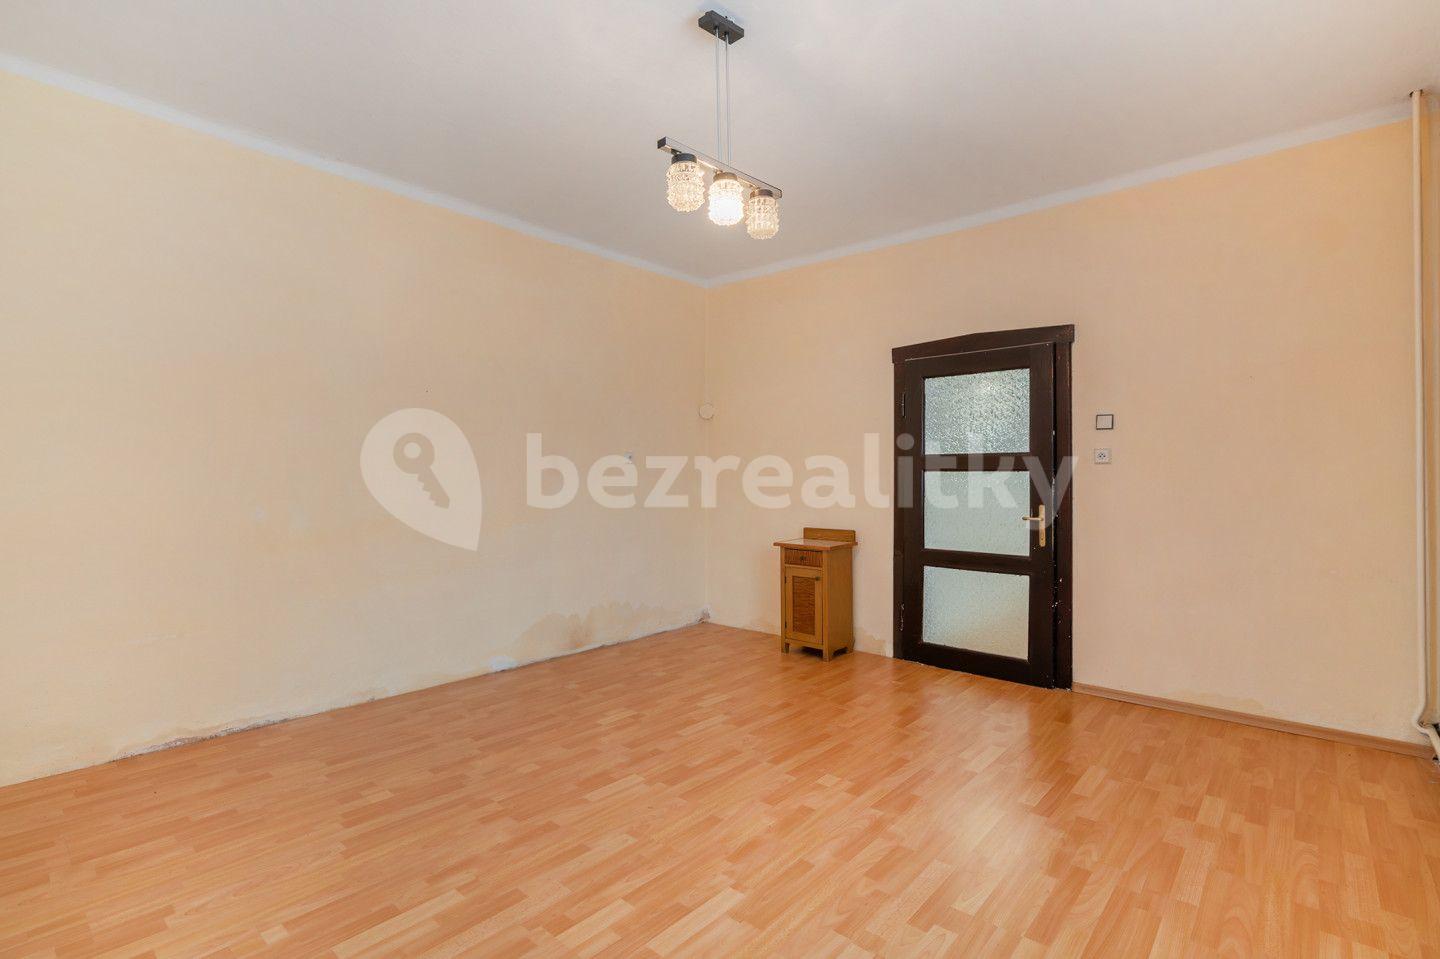 Prodej domu 159 m², pozemek 755 m², Dvořákova, Doksy, Liberecký kraj